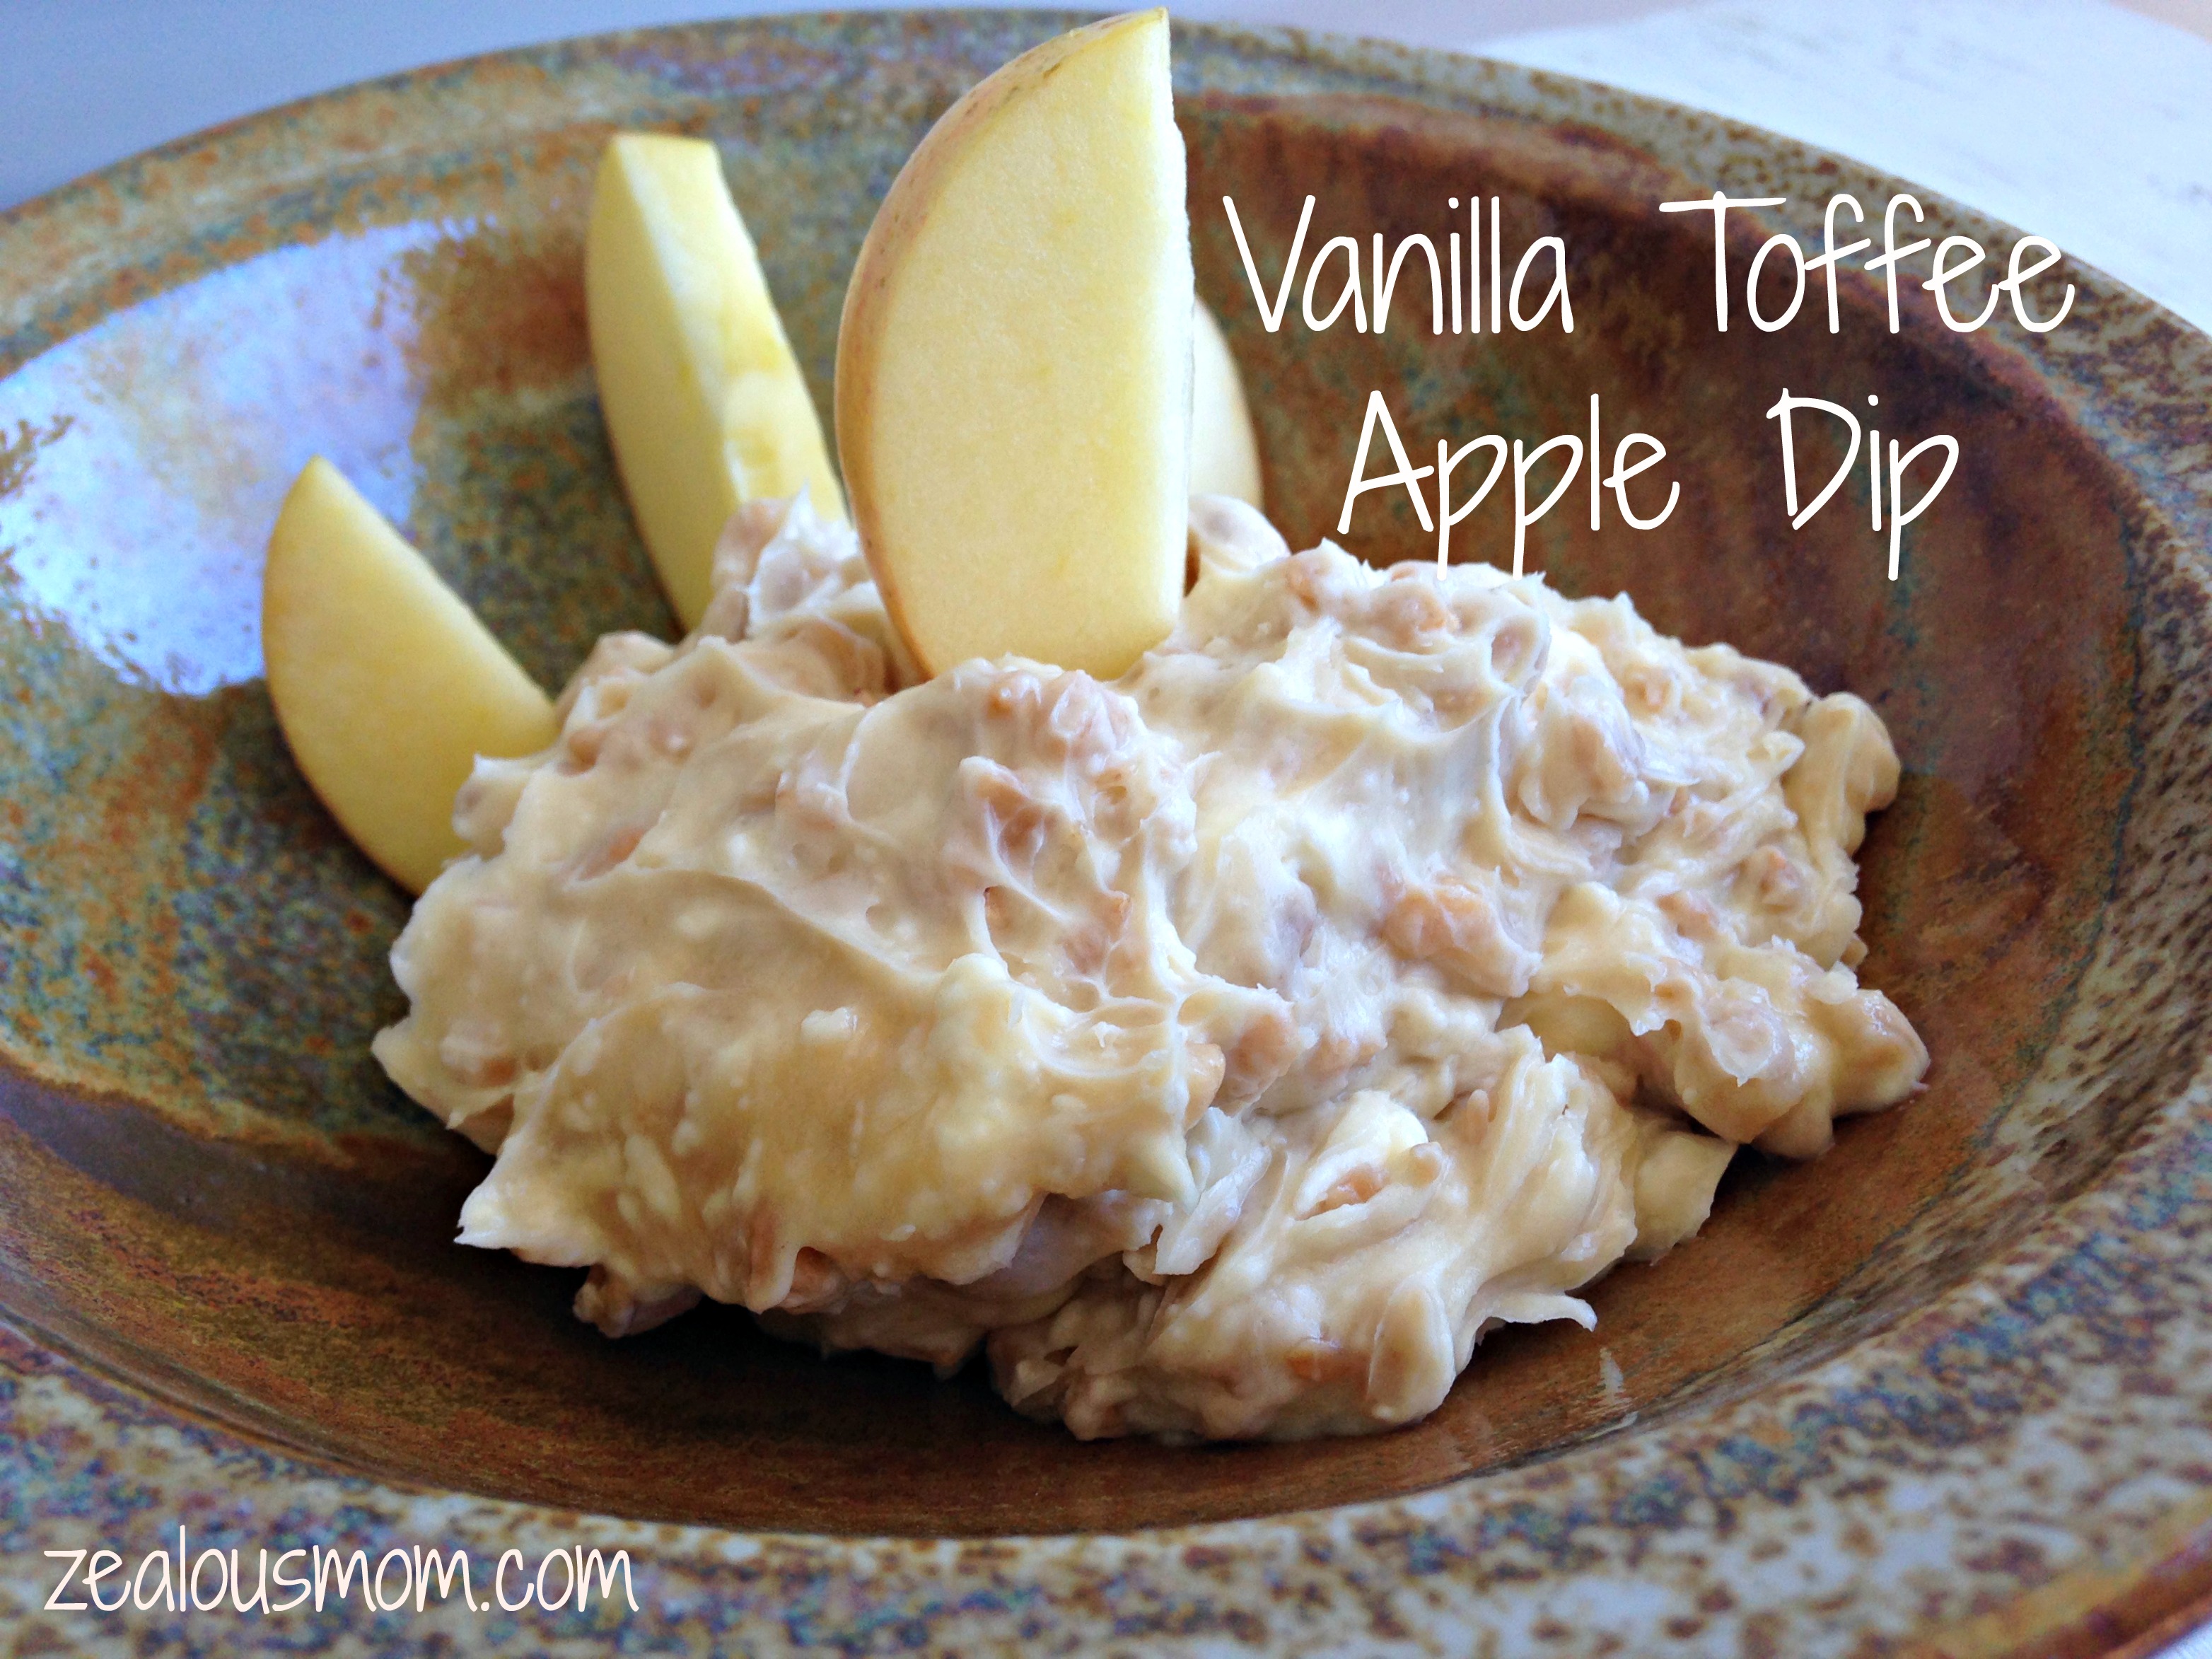 Vanilla Toffee Apple Dip